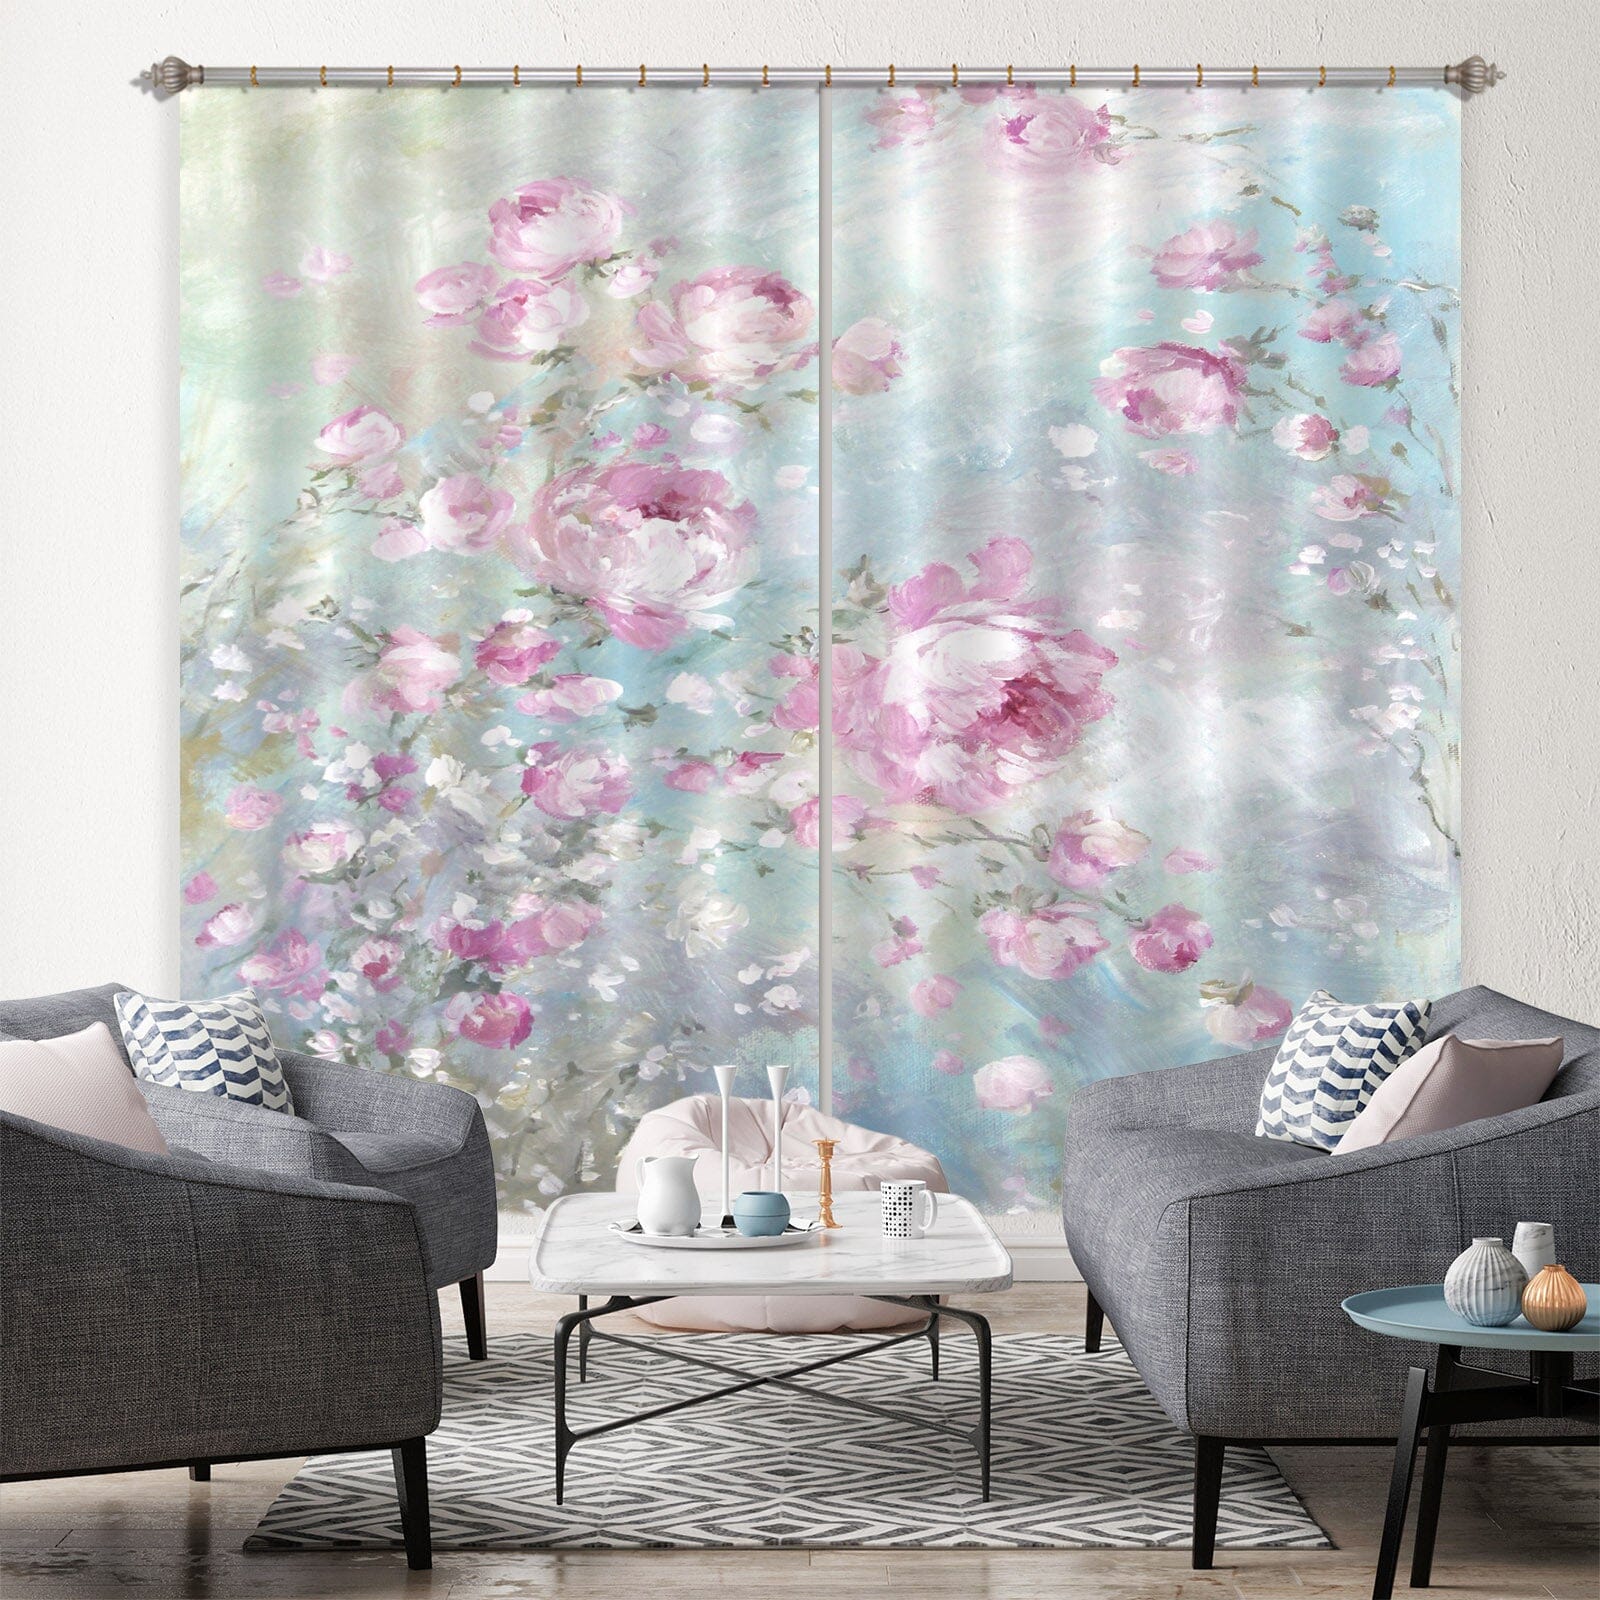 3D Pink Flowers 056 Debi Coules Curtain Curtains Drapes Curtains AJ Creativity Home 